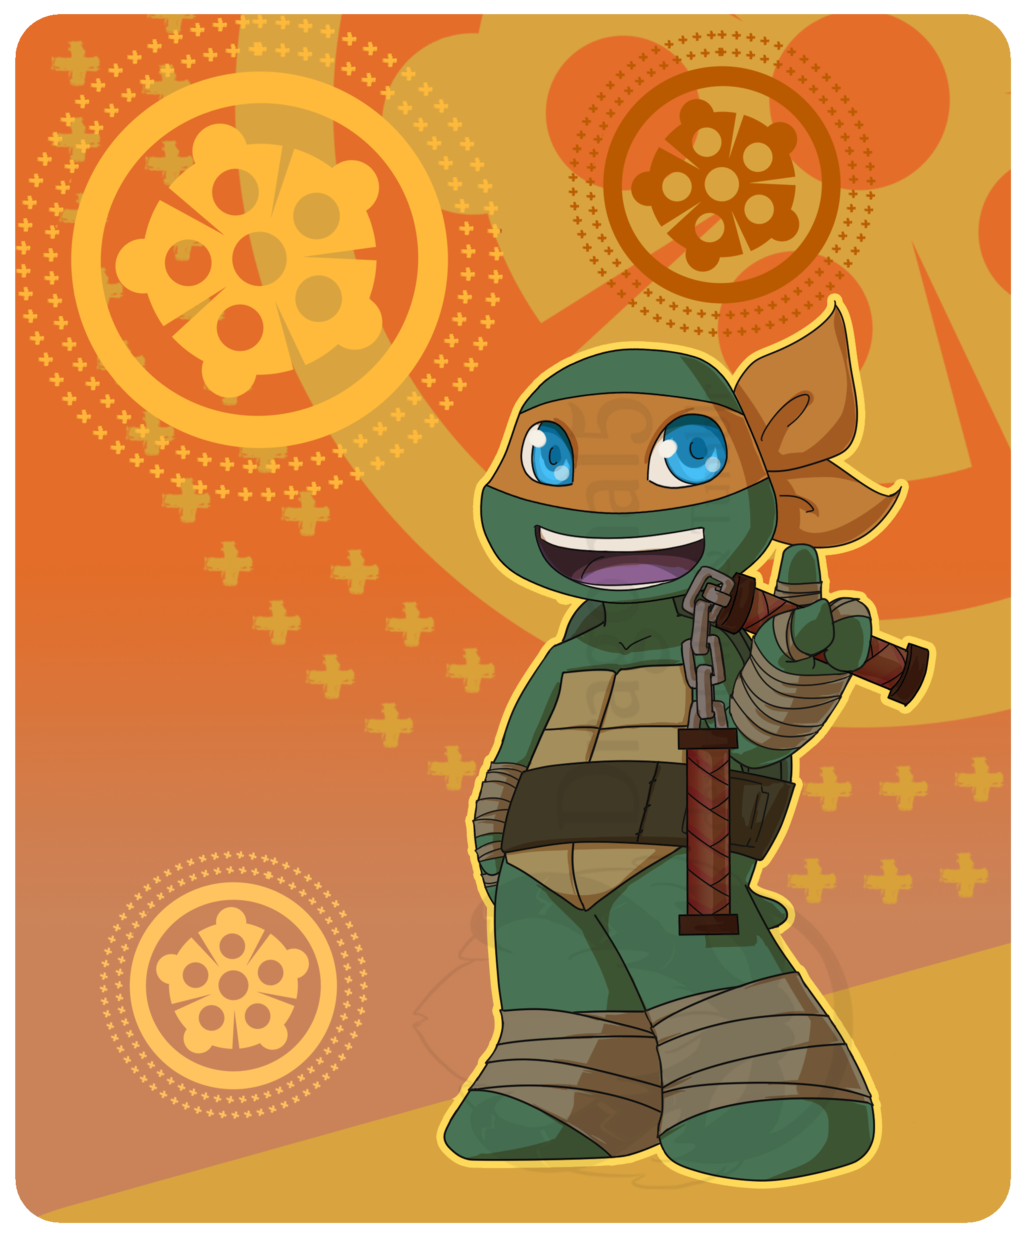 Hamato Clan singles Mikey. Teenage mutant ninja turtles art, Teenage ninja turtles, Tmnt wallpaper